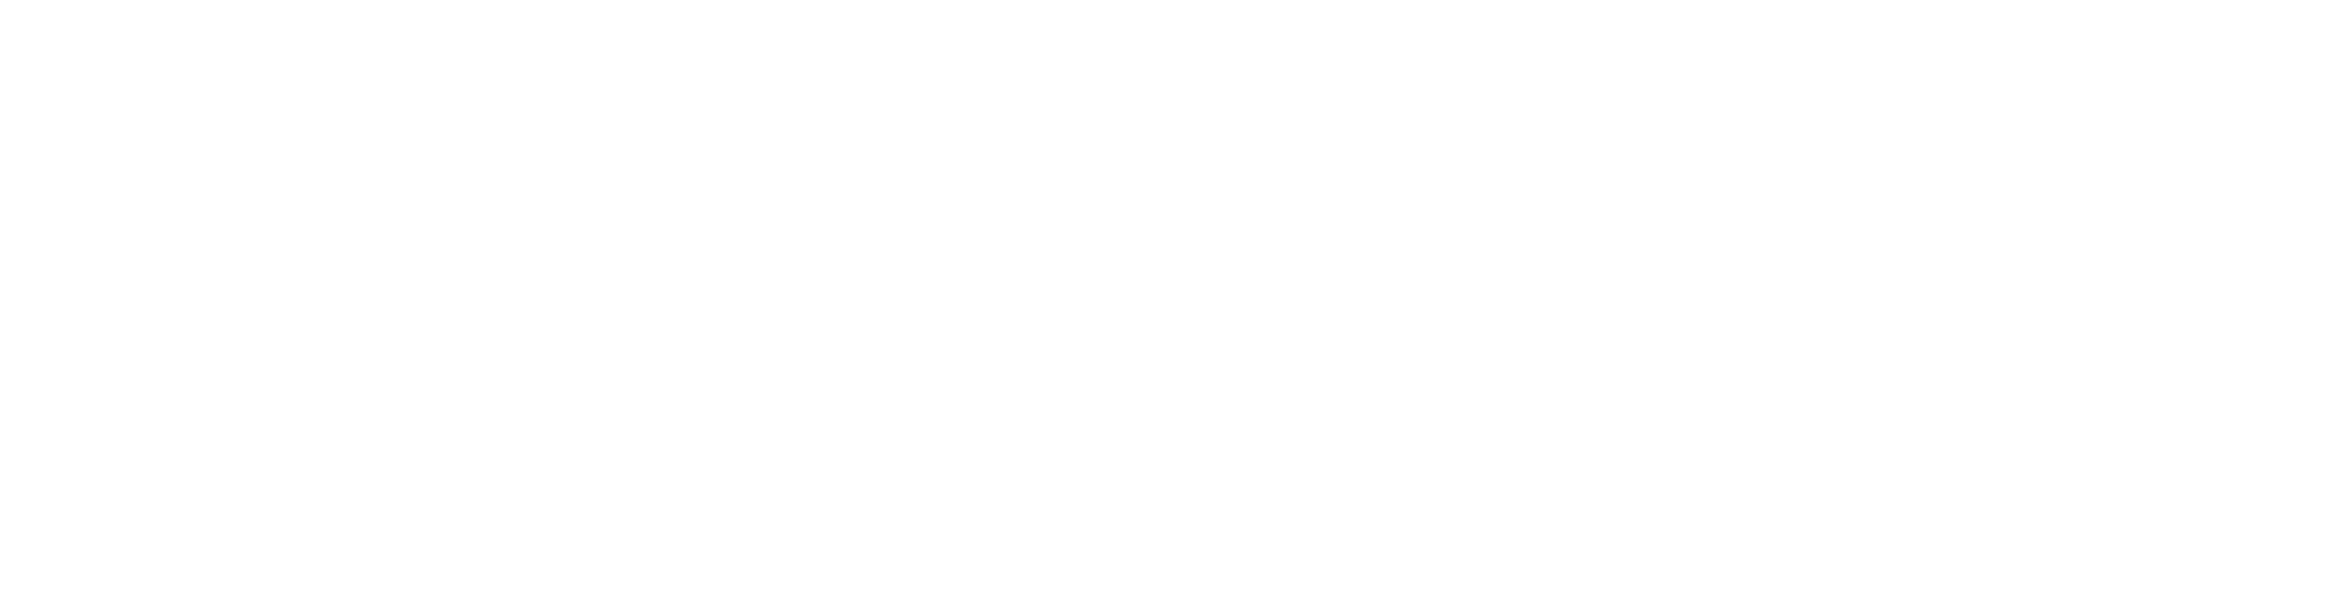 MapVX Logo White